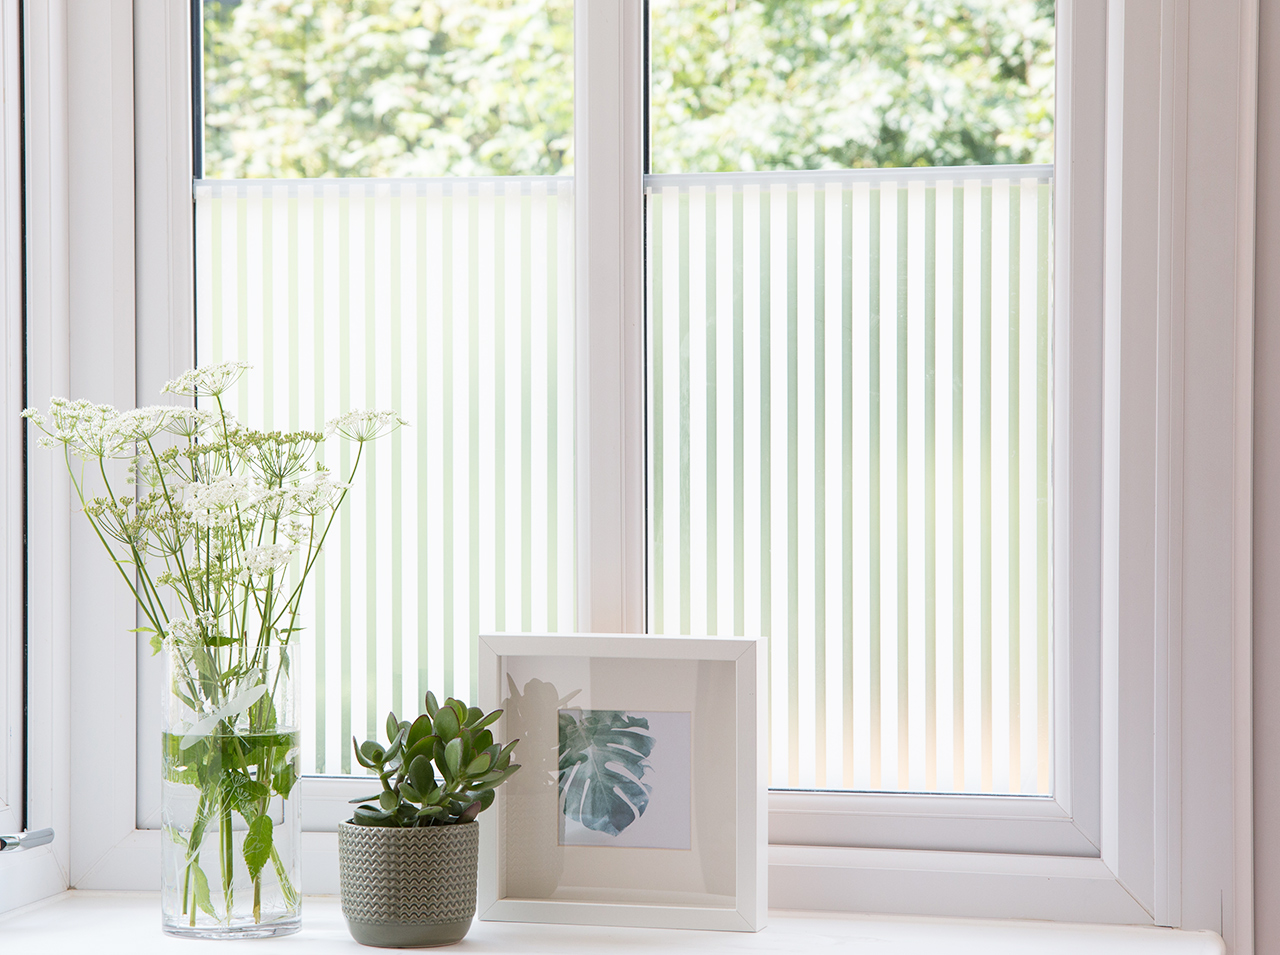 dcfix window glass window film DIY deco living room privacy stripes